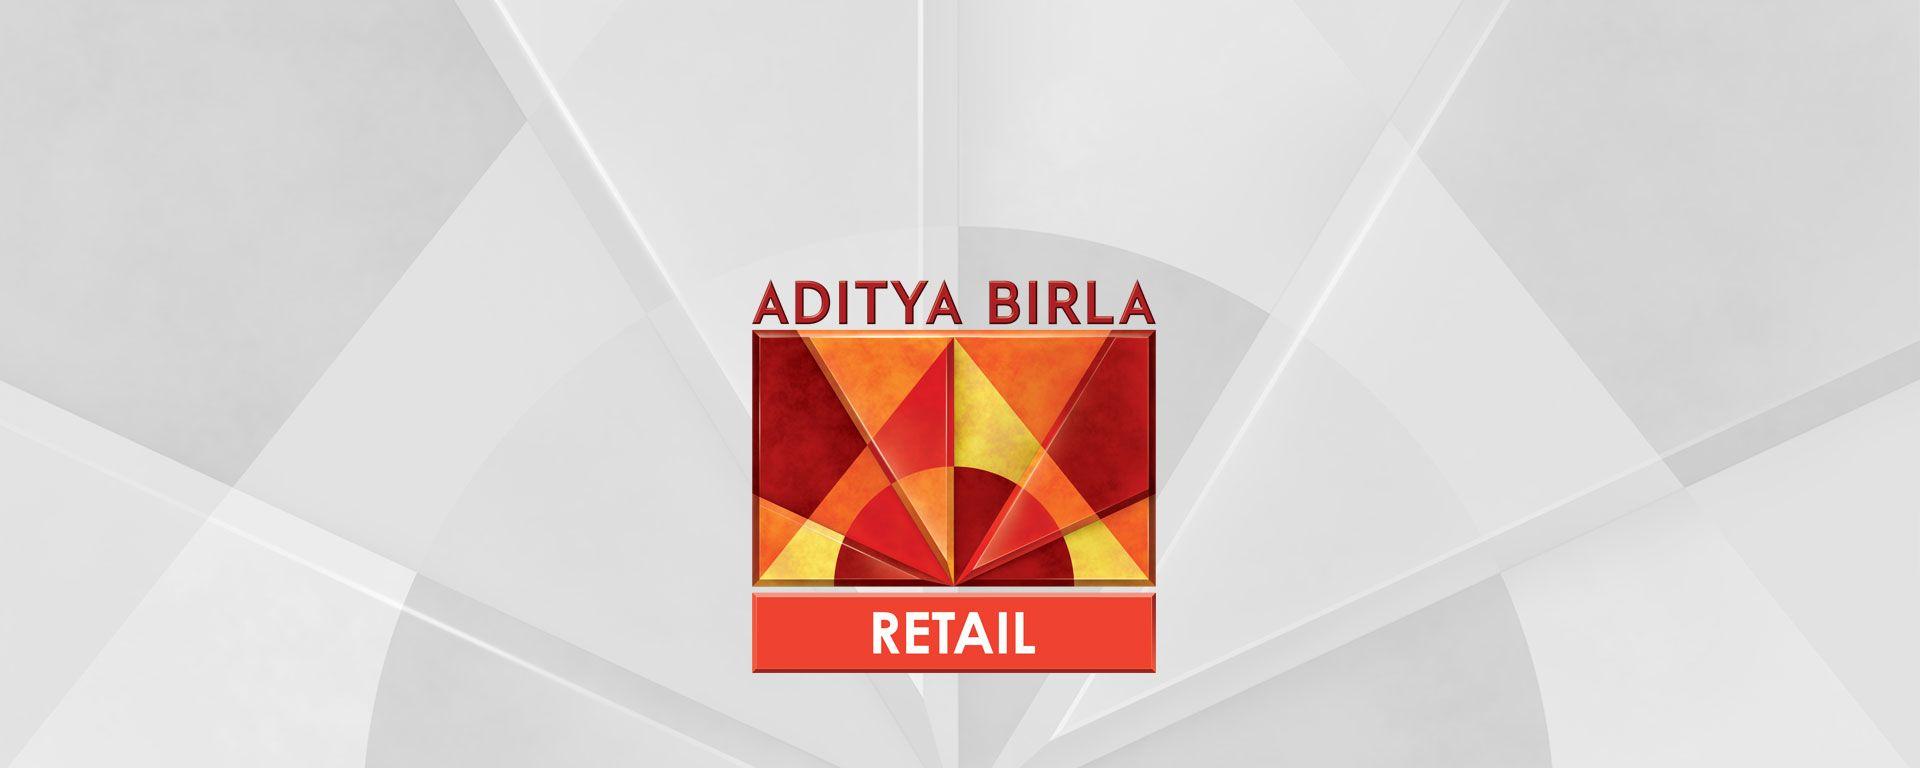 Retail Grocery Store Logo - About Aditya Birla Retail Limited